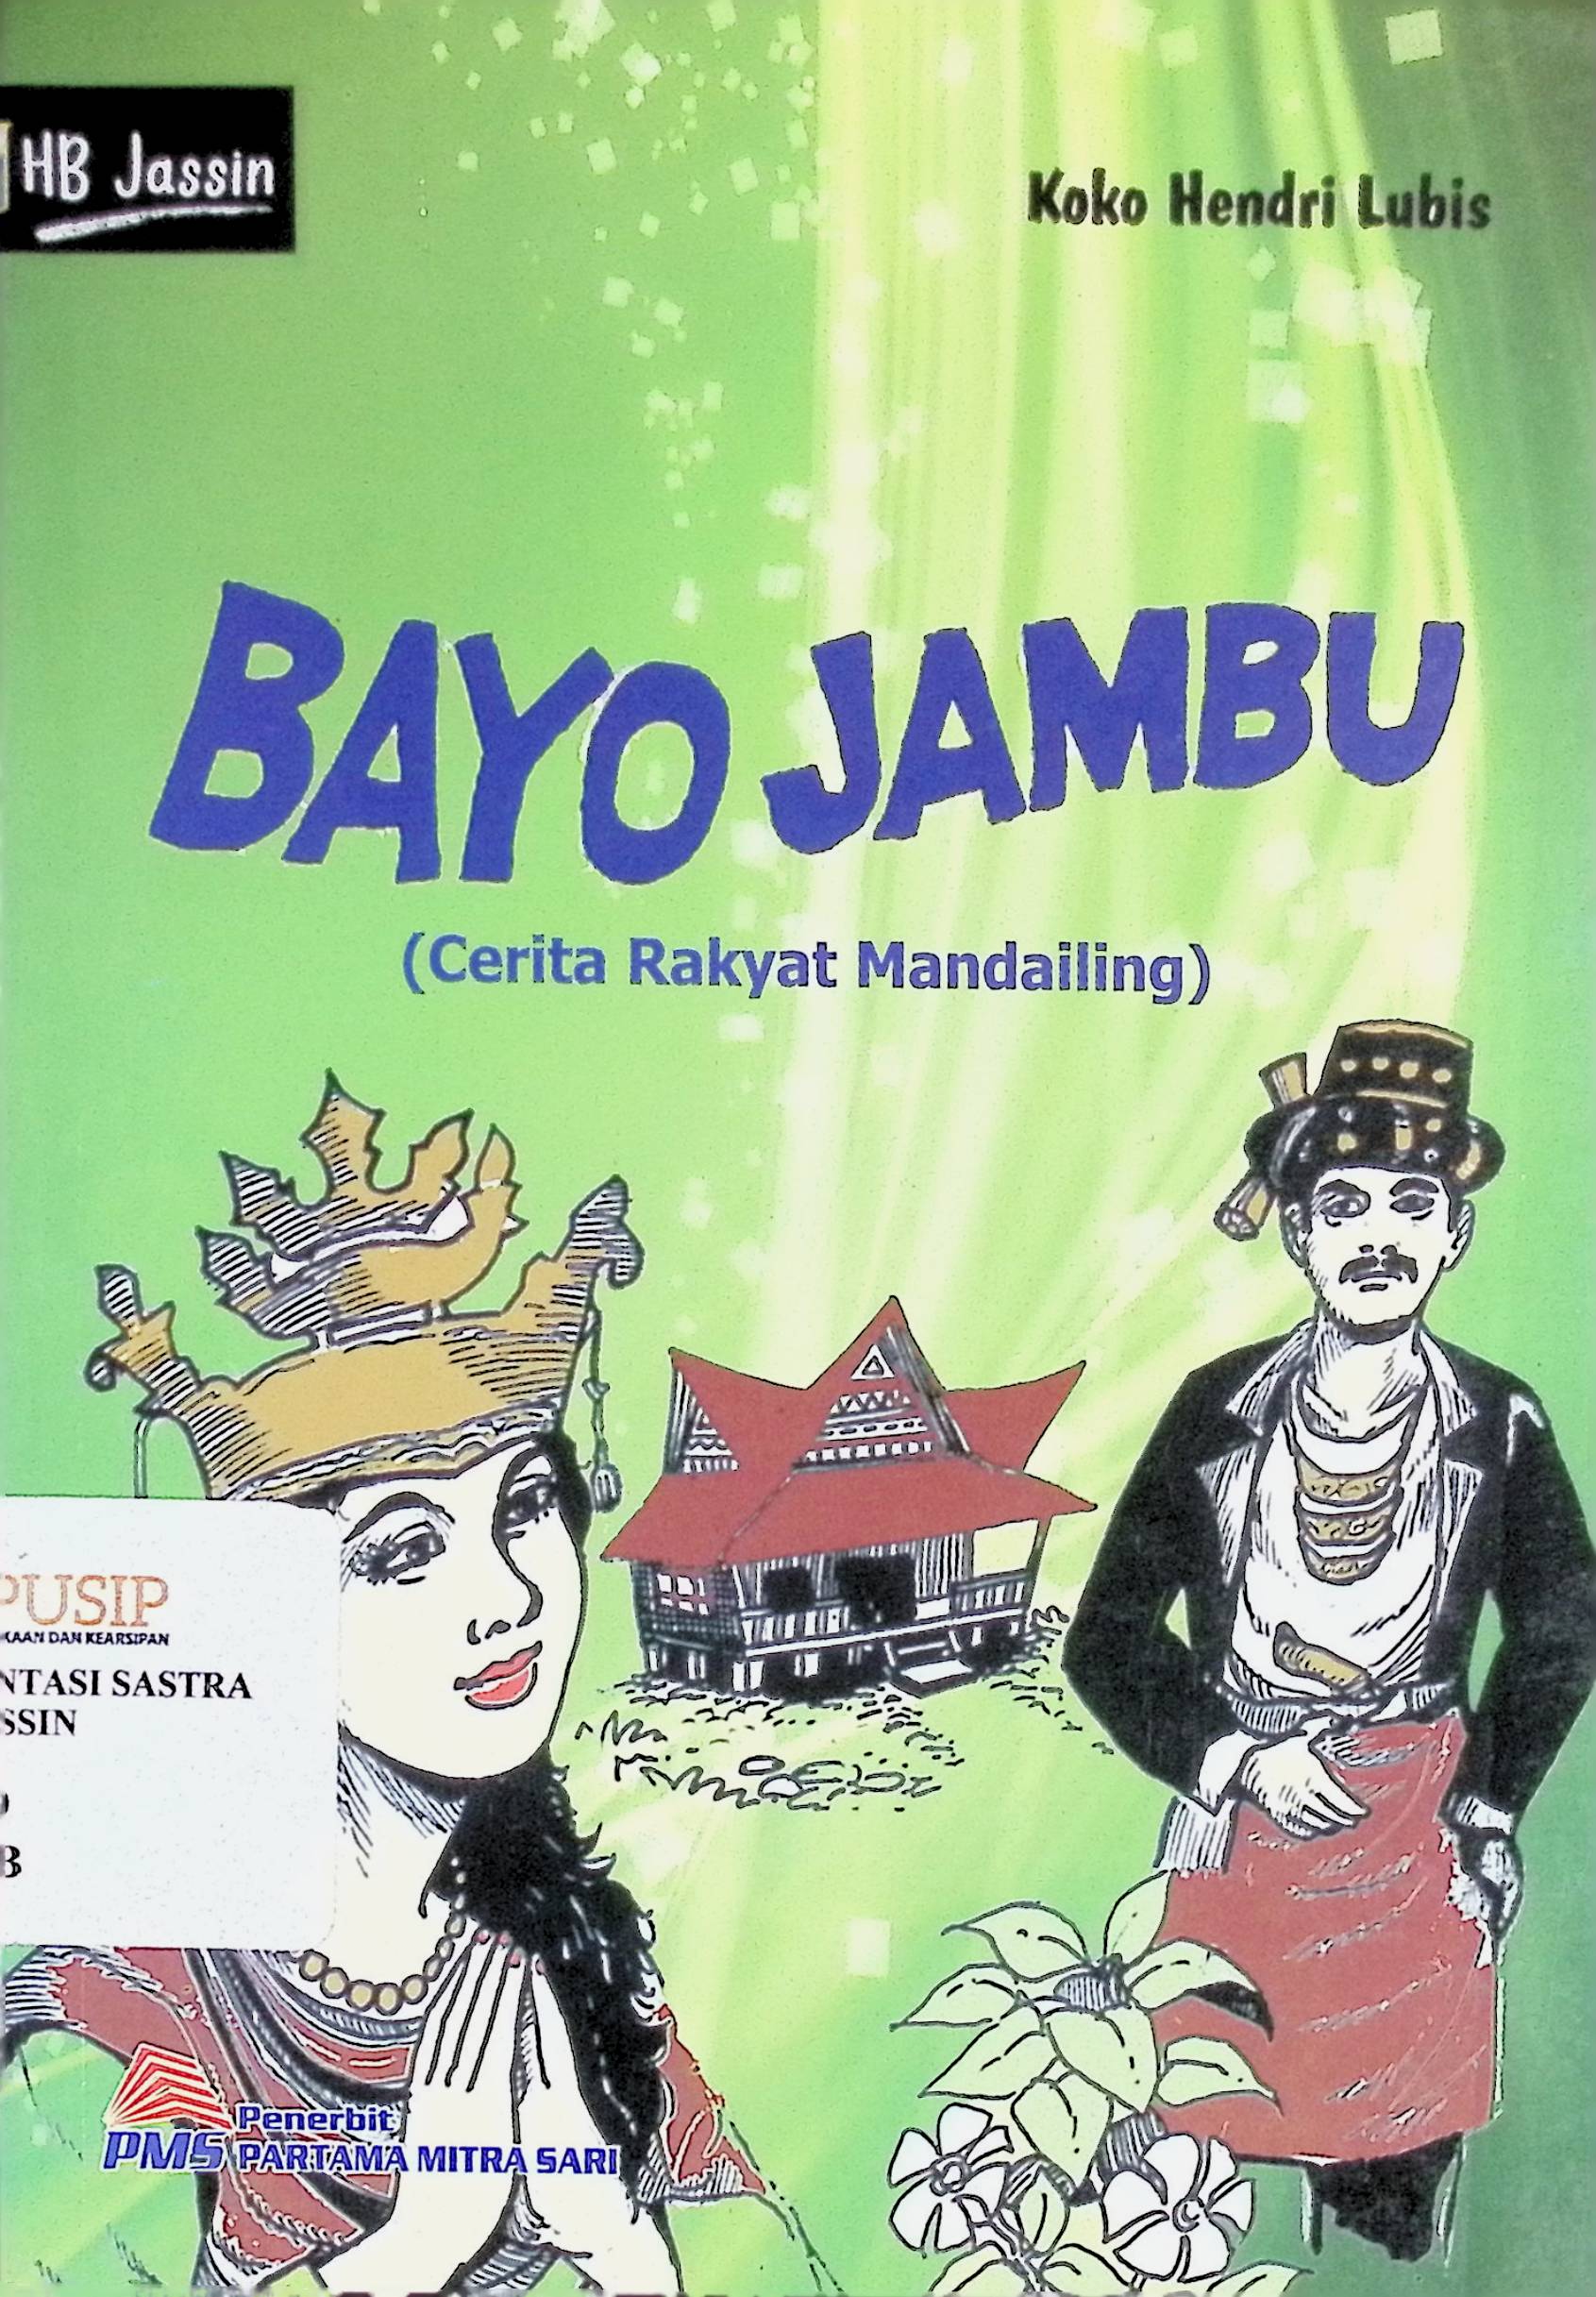 Bayo jambu :  cerita rakyat mandailing